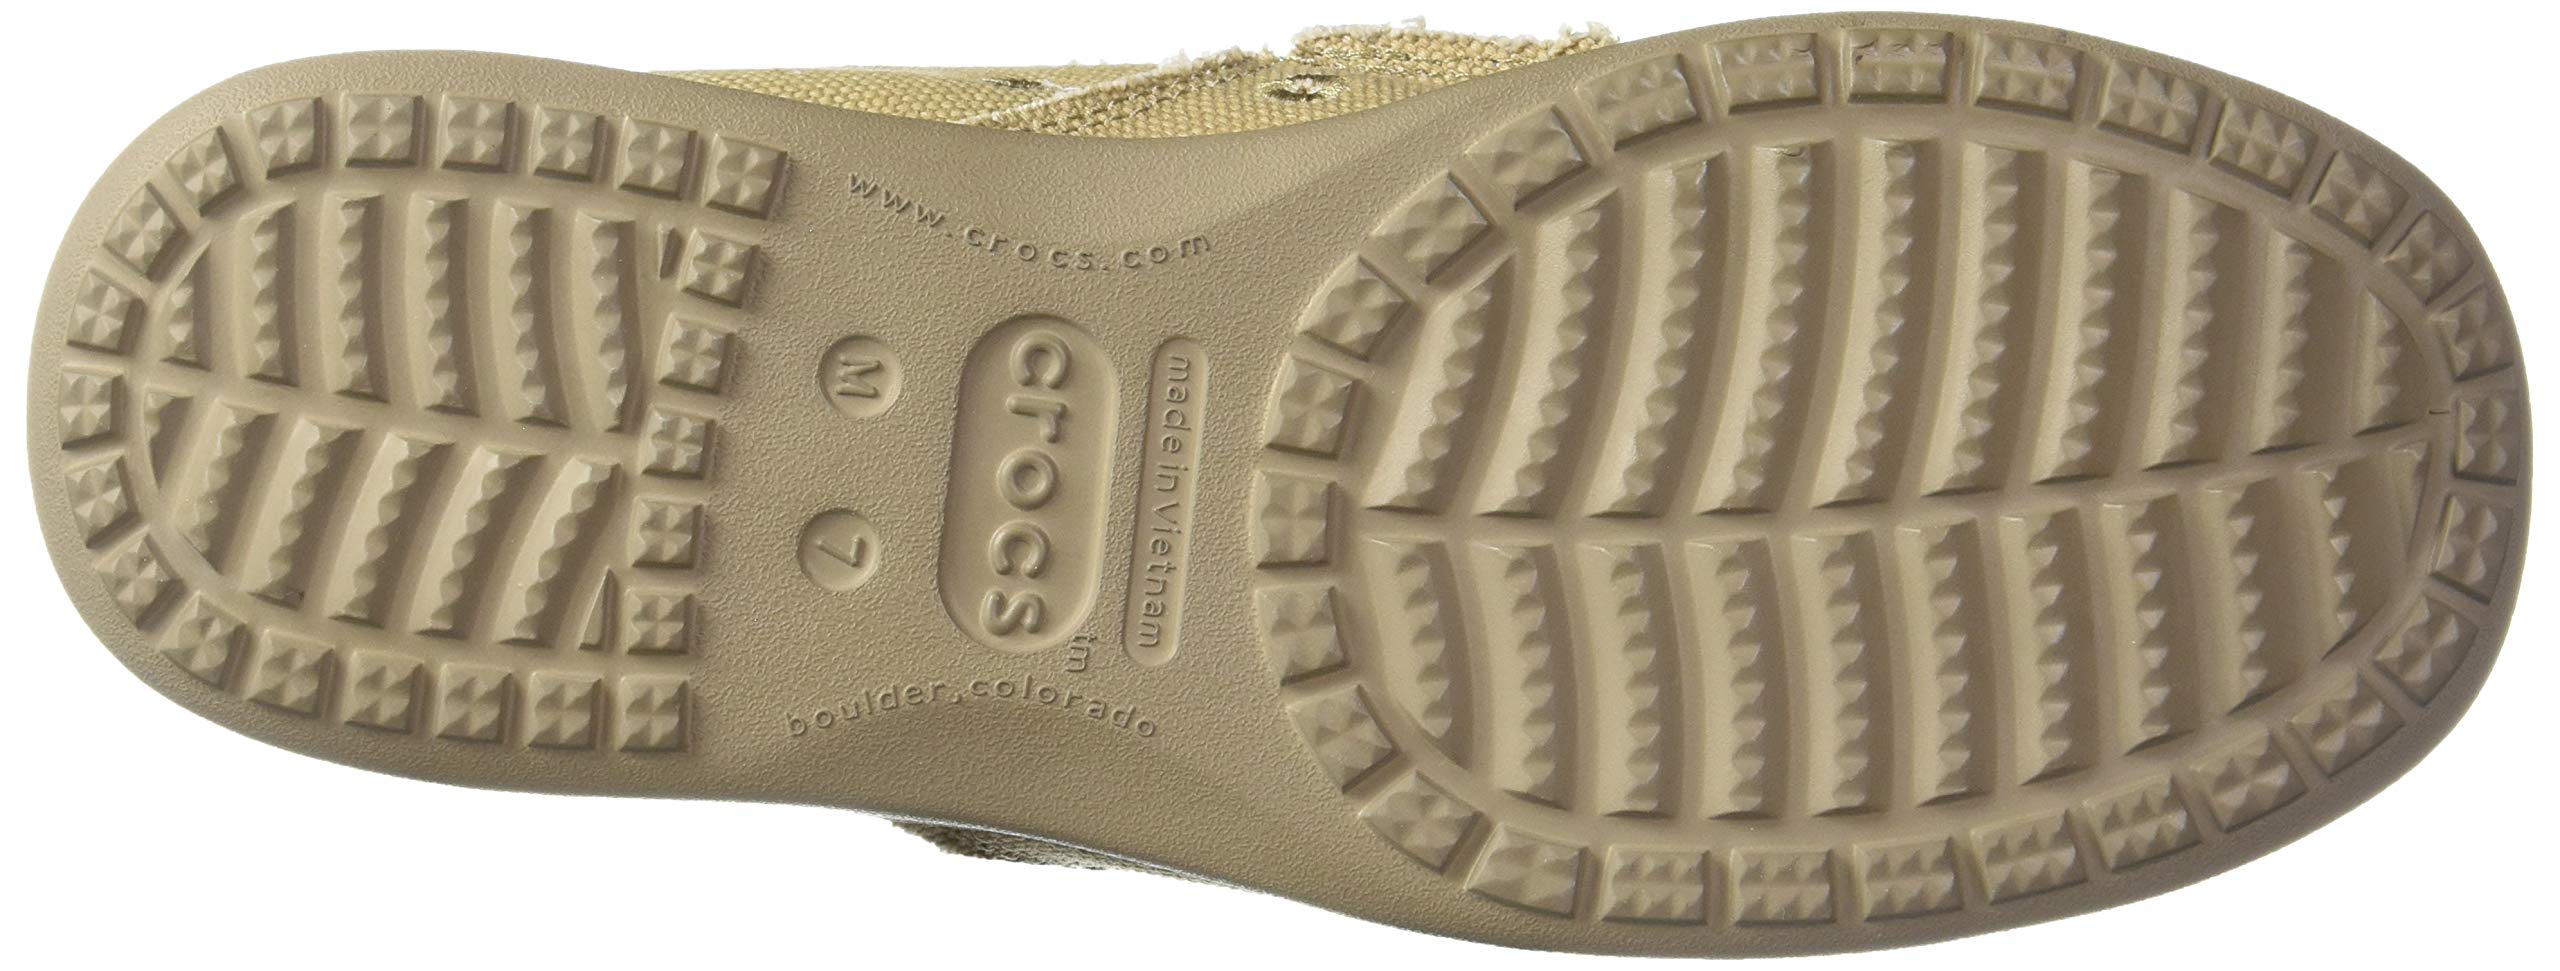 Crocs Men's Santa Cruz Canvas Linen Slip On Loafer